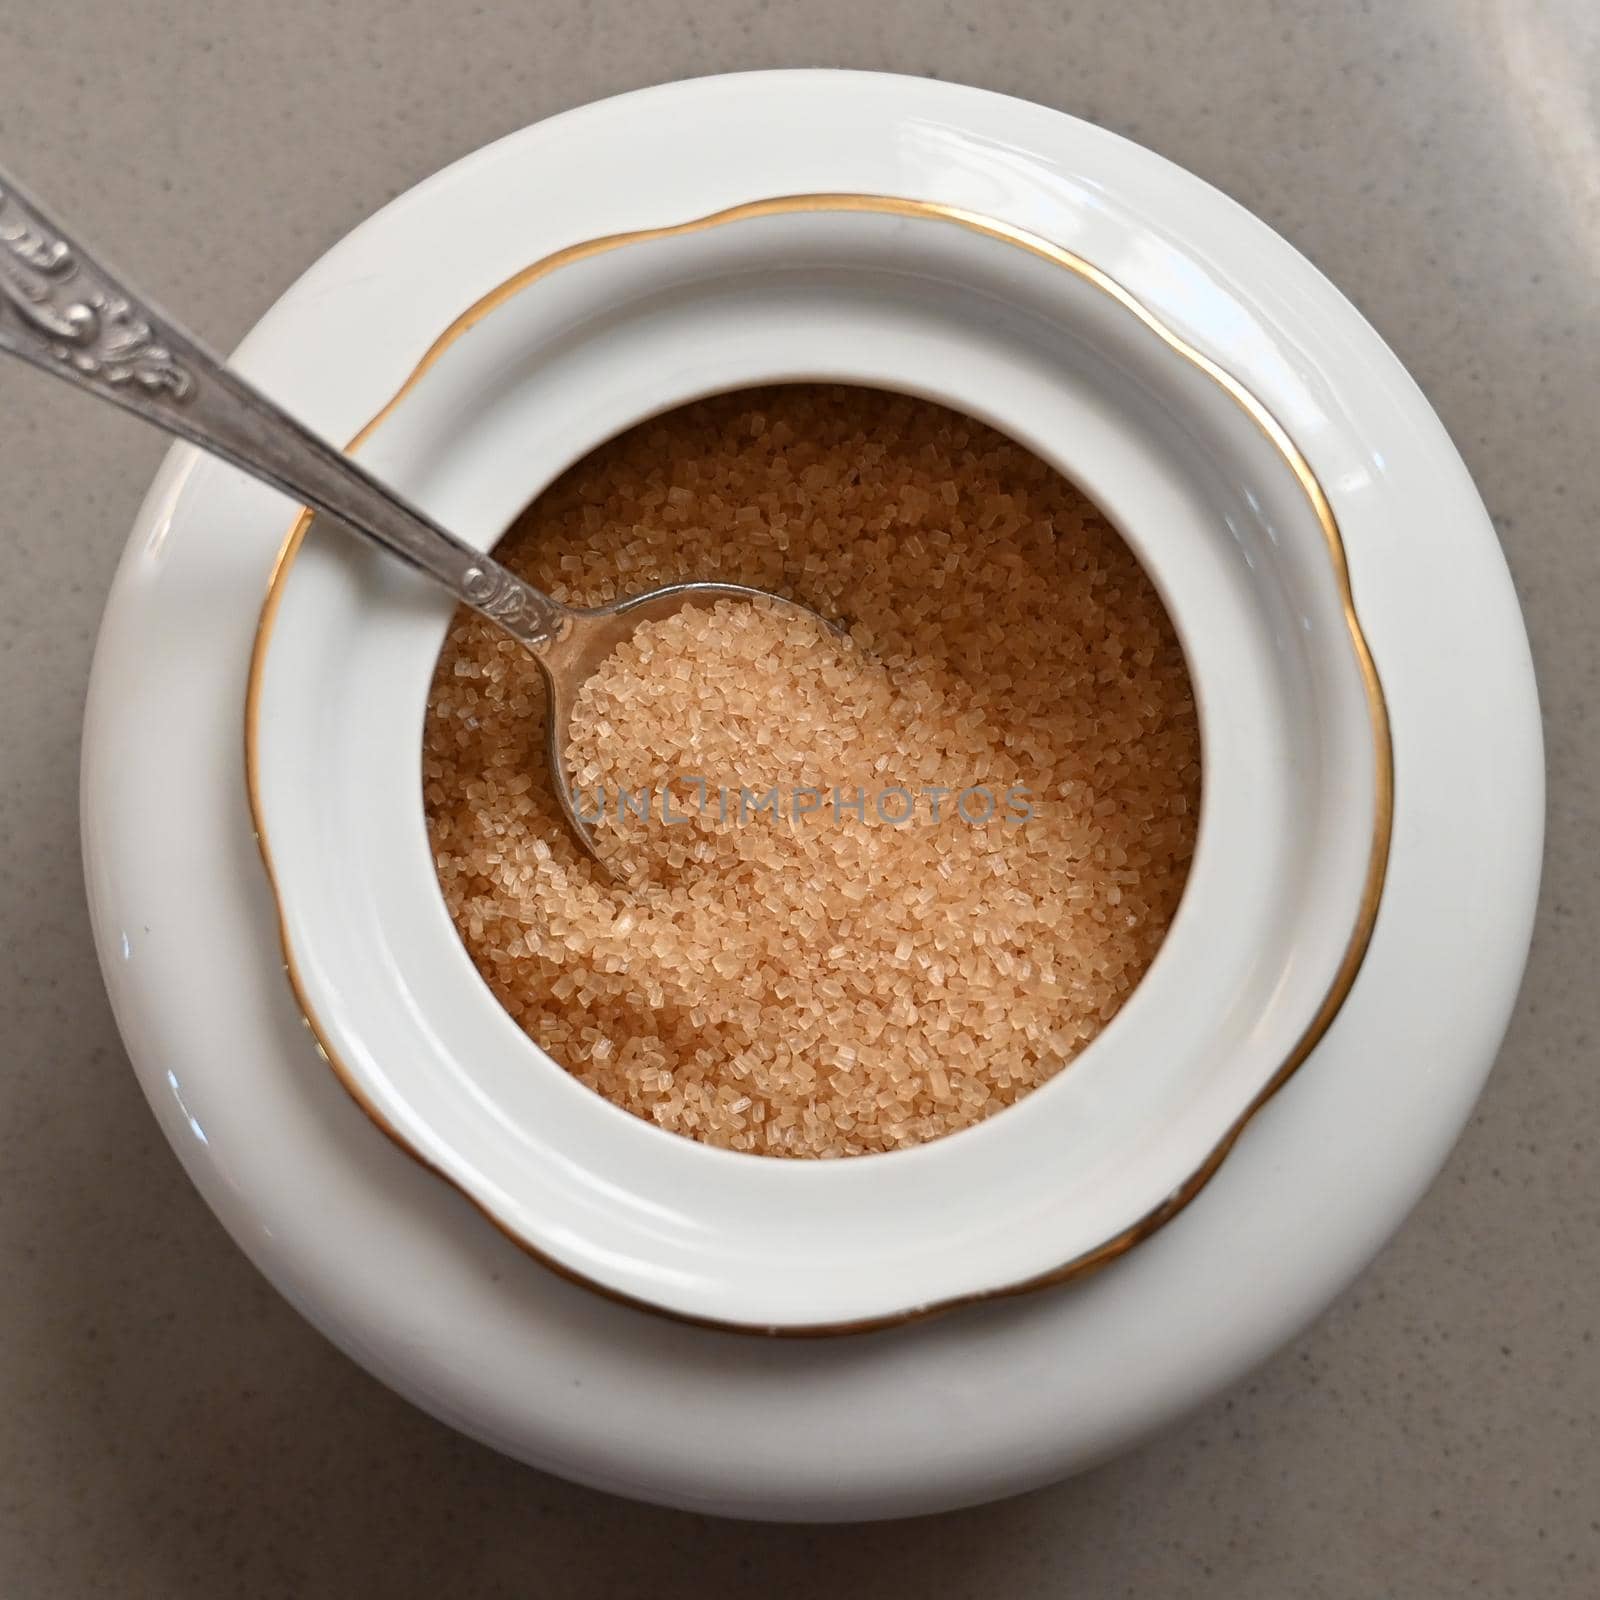 Cane sugar in a porcelain sugar bowl with a spoon by ISRAFOTO